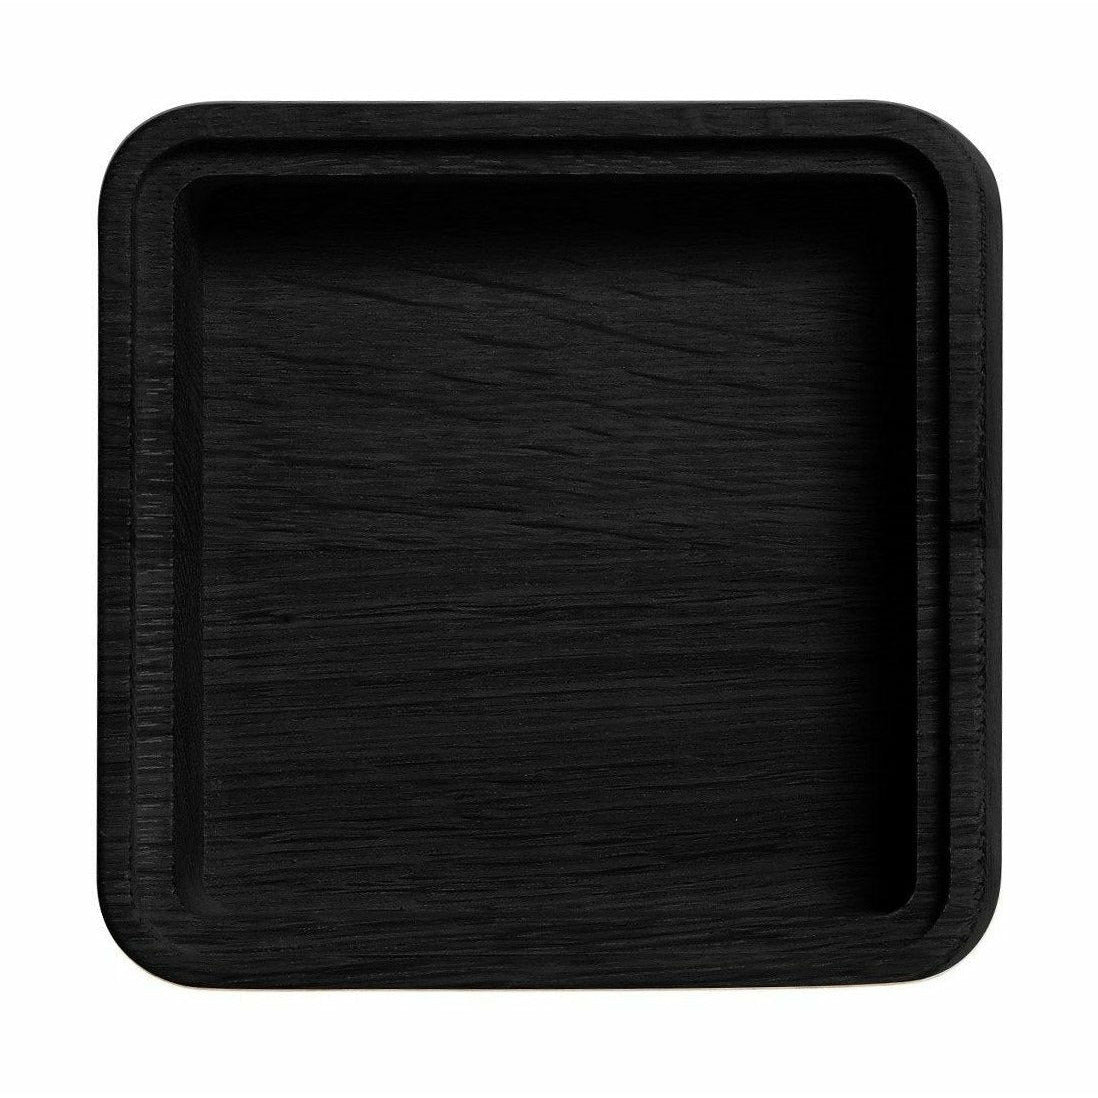 Andersen Furniture Create Me Box Black, 1 Compartment, 12x12cm